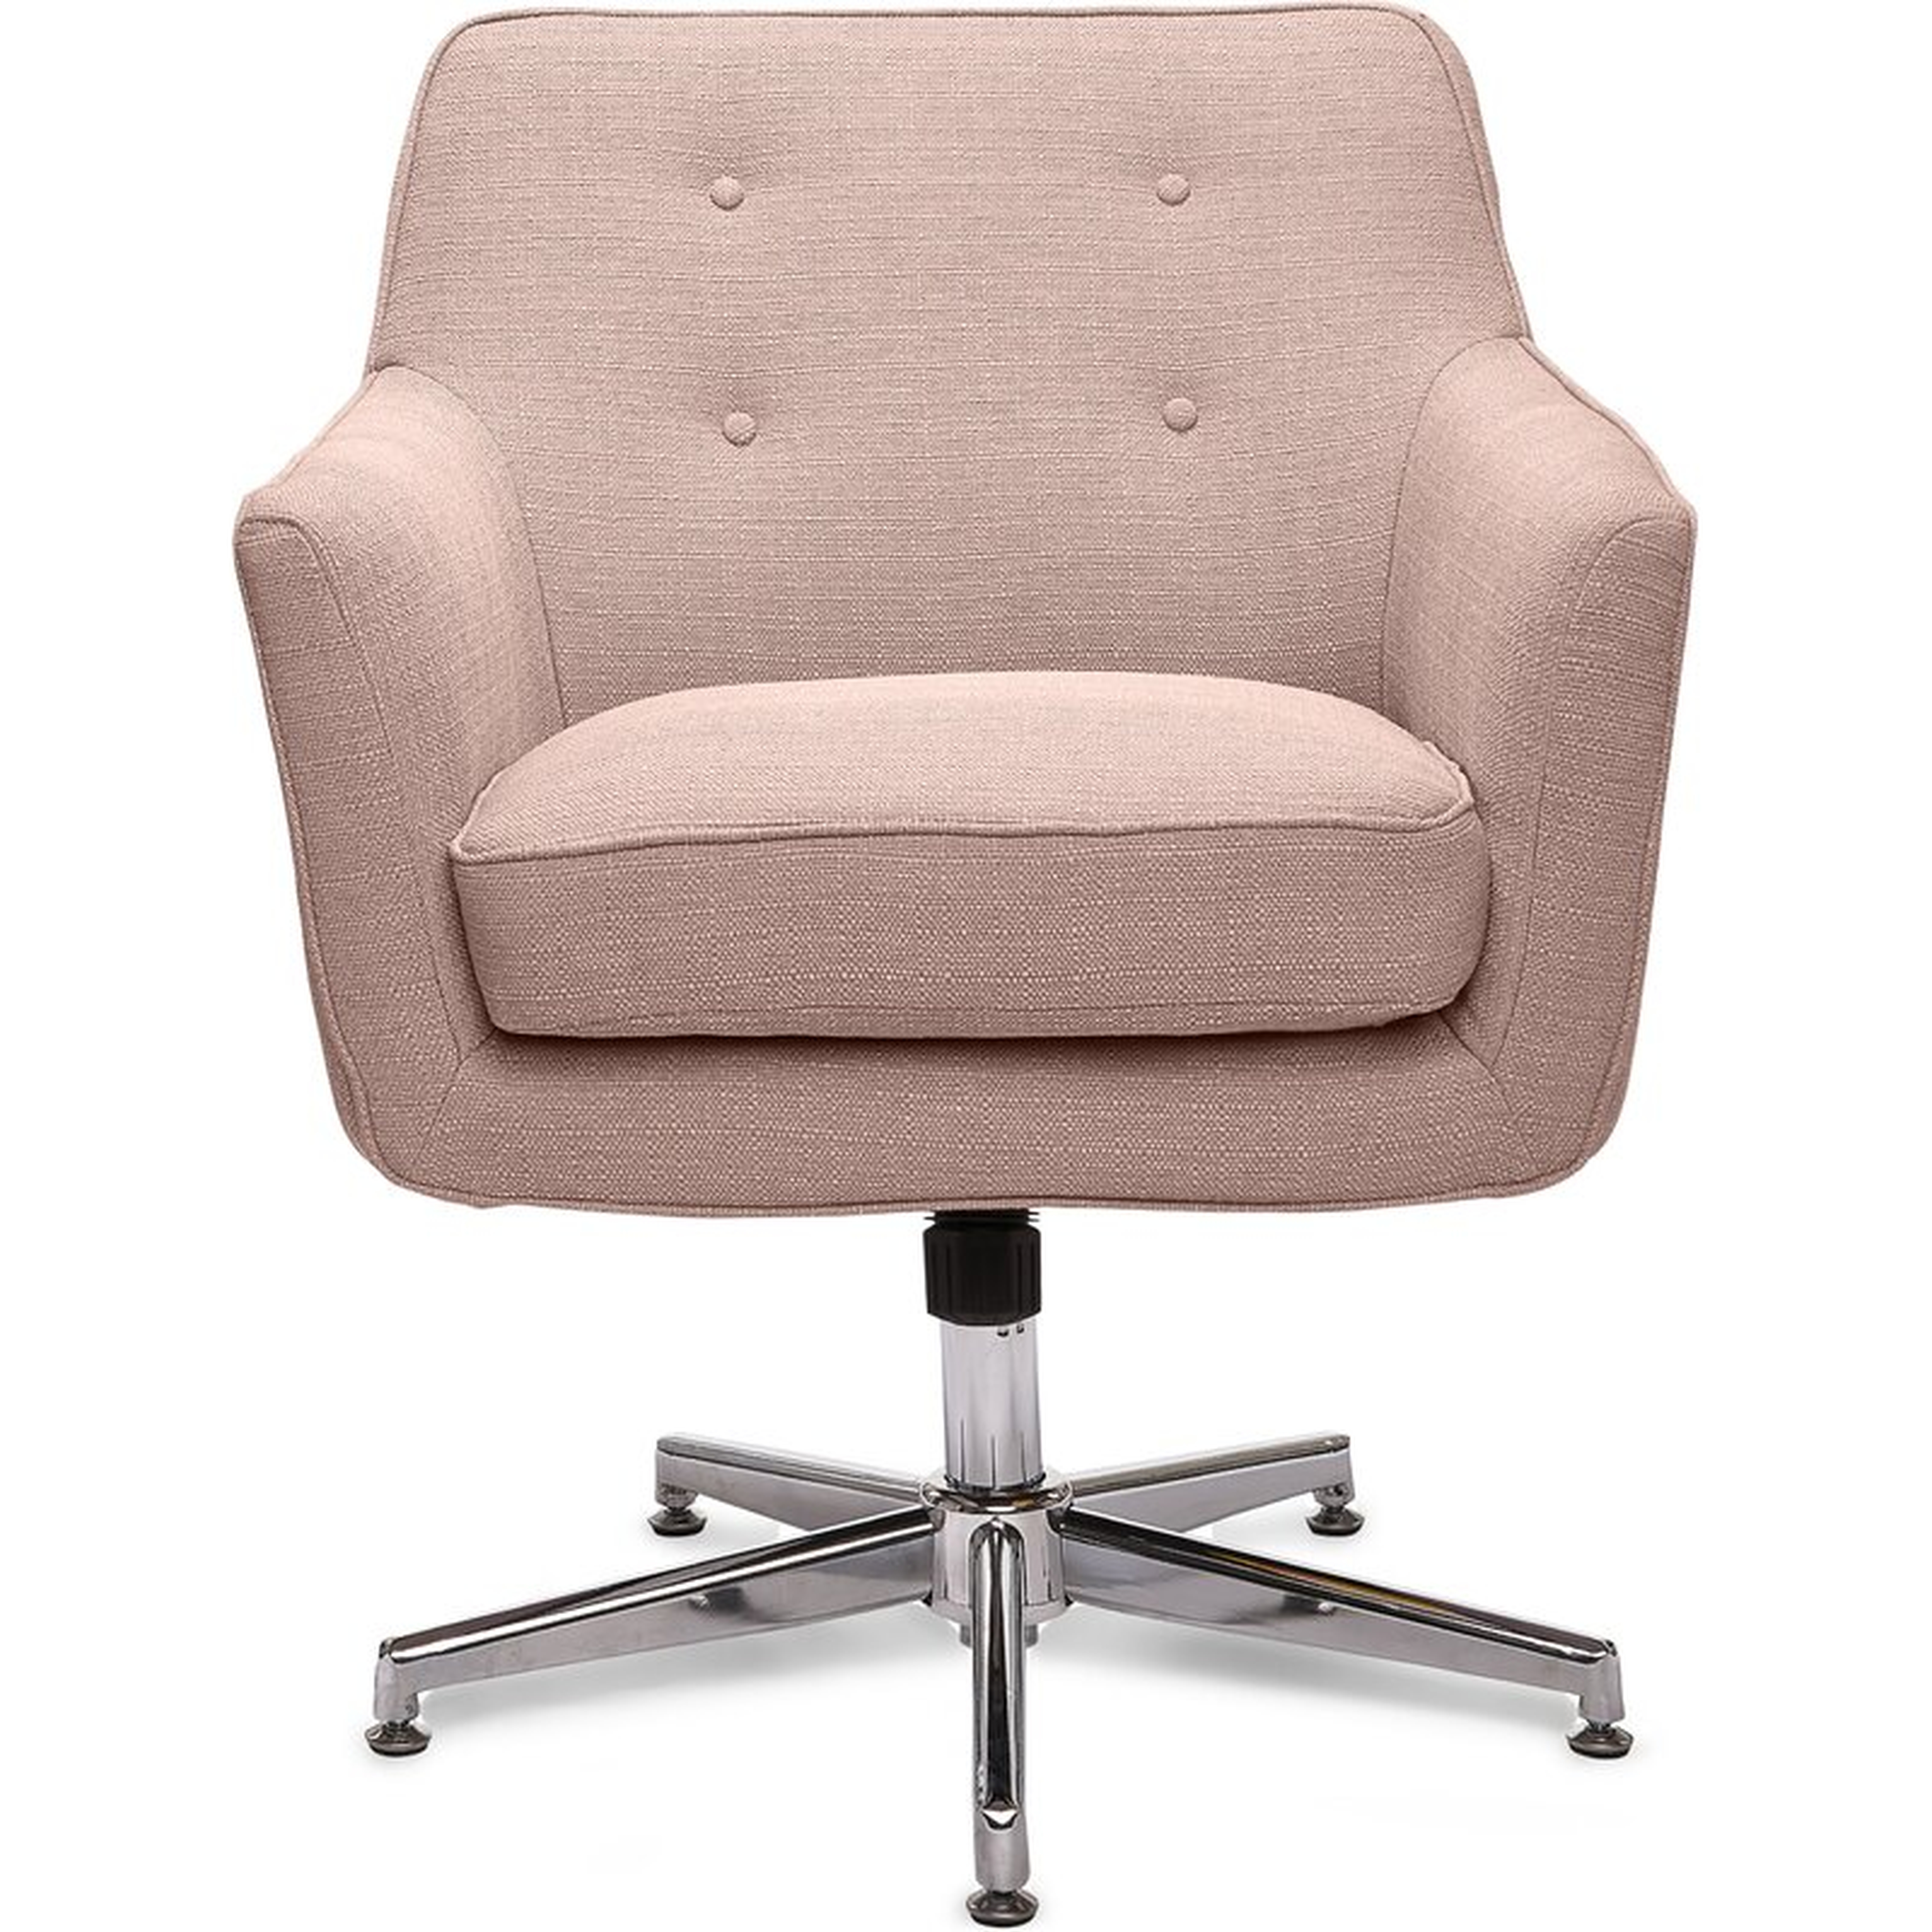 Serta Ashland Mid-Back Desk Chair,  Blush Pink - Wayfair